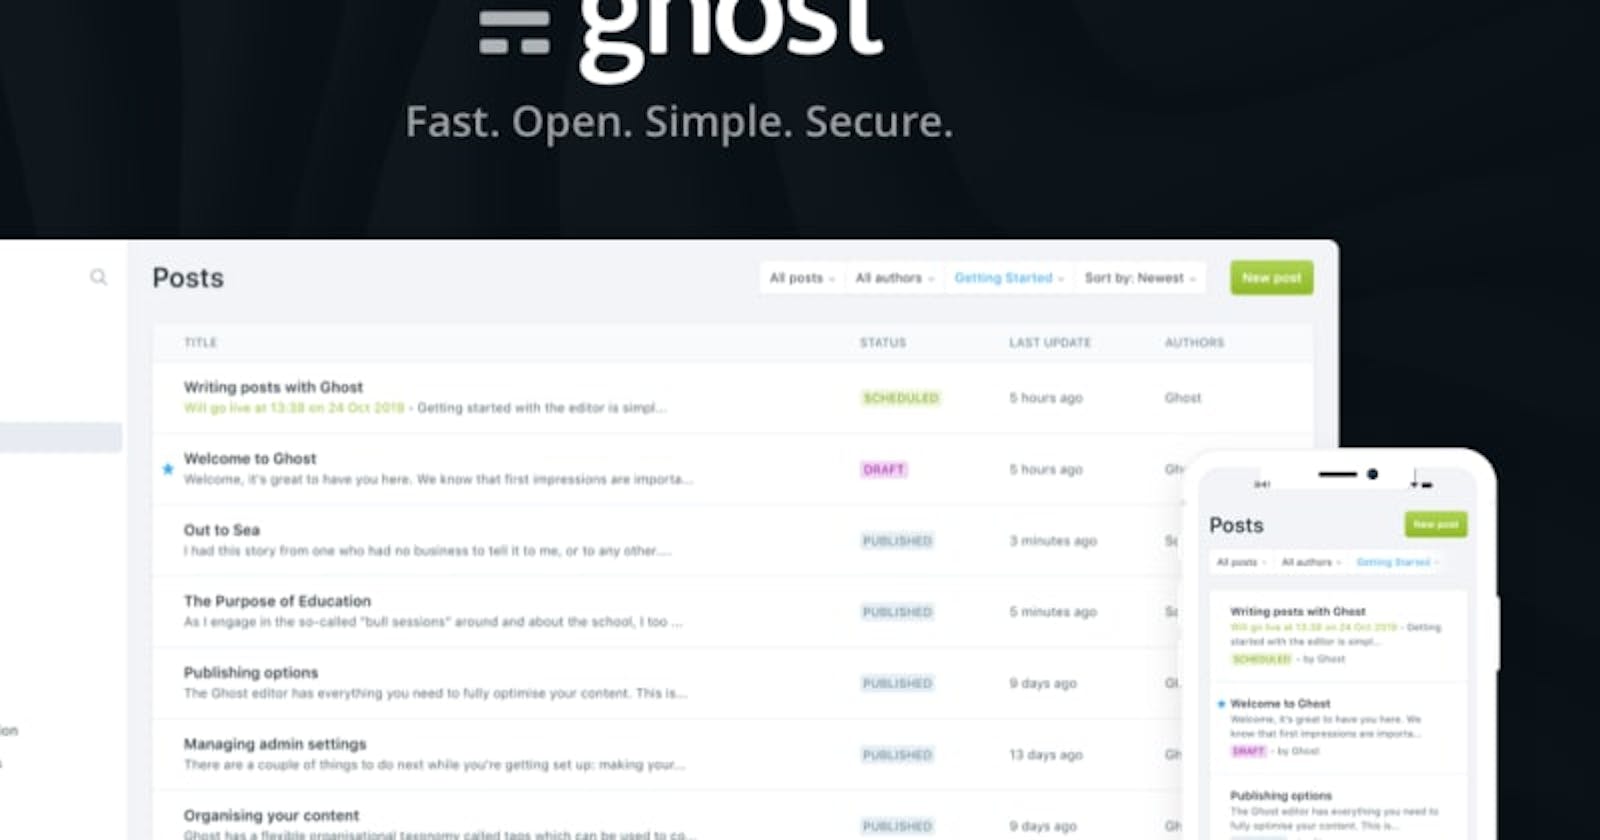 How to run Ghost CMS + Docker + Digital Ocean